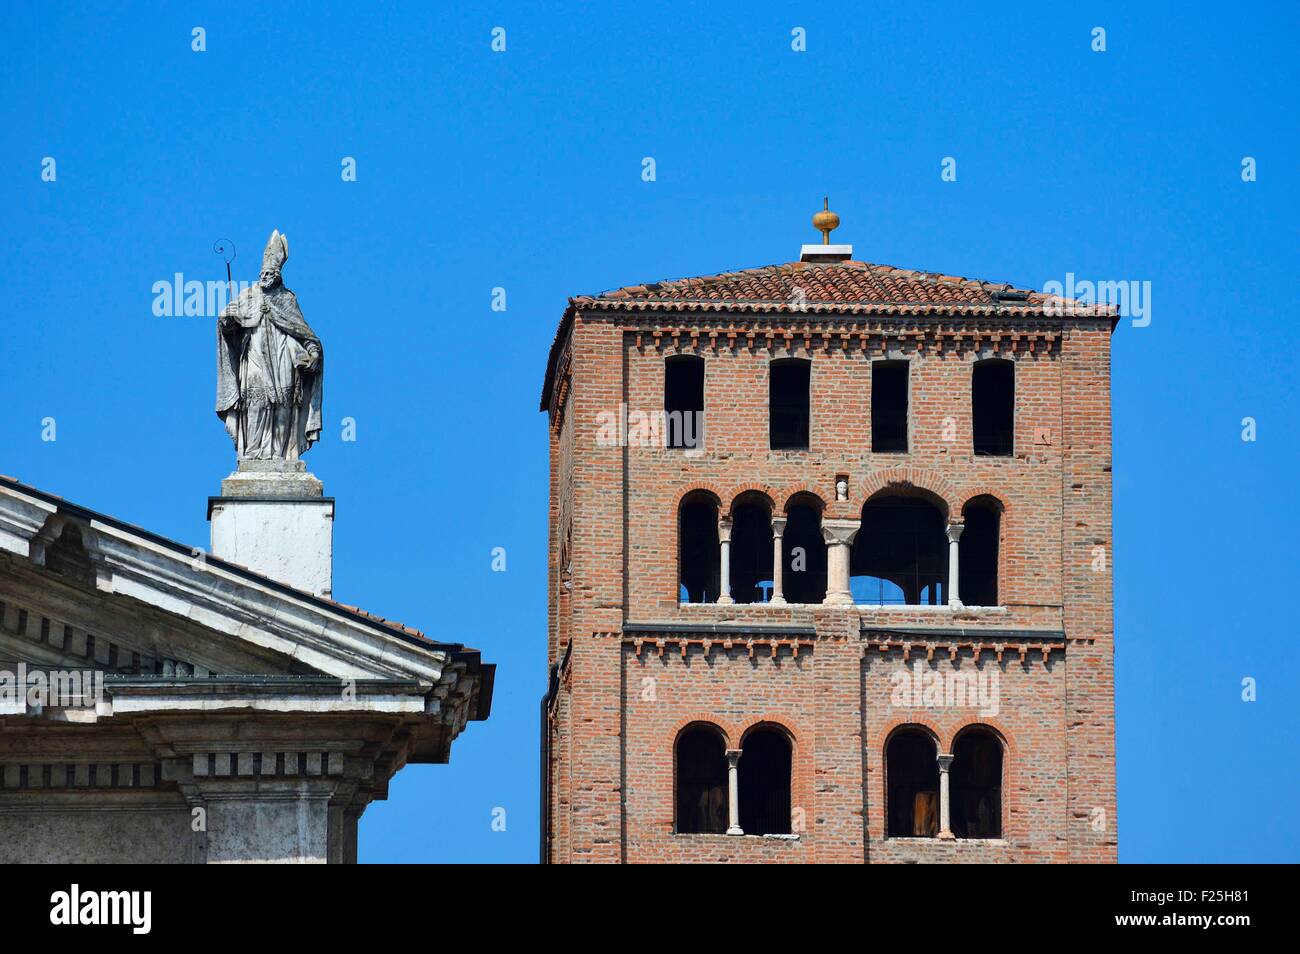 Italien, Lombardei, Mantua, der Duomo (Kathedrale), Piazza Sordello Stockfoto